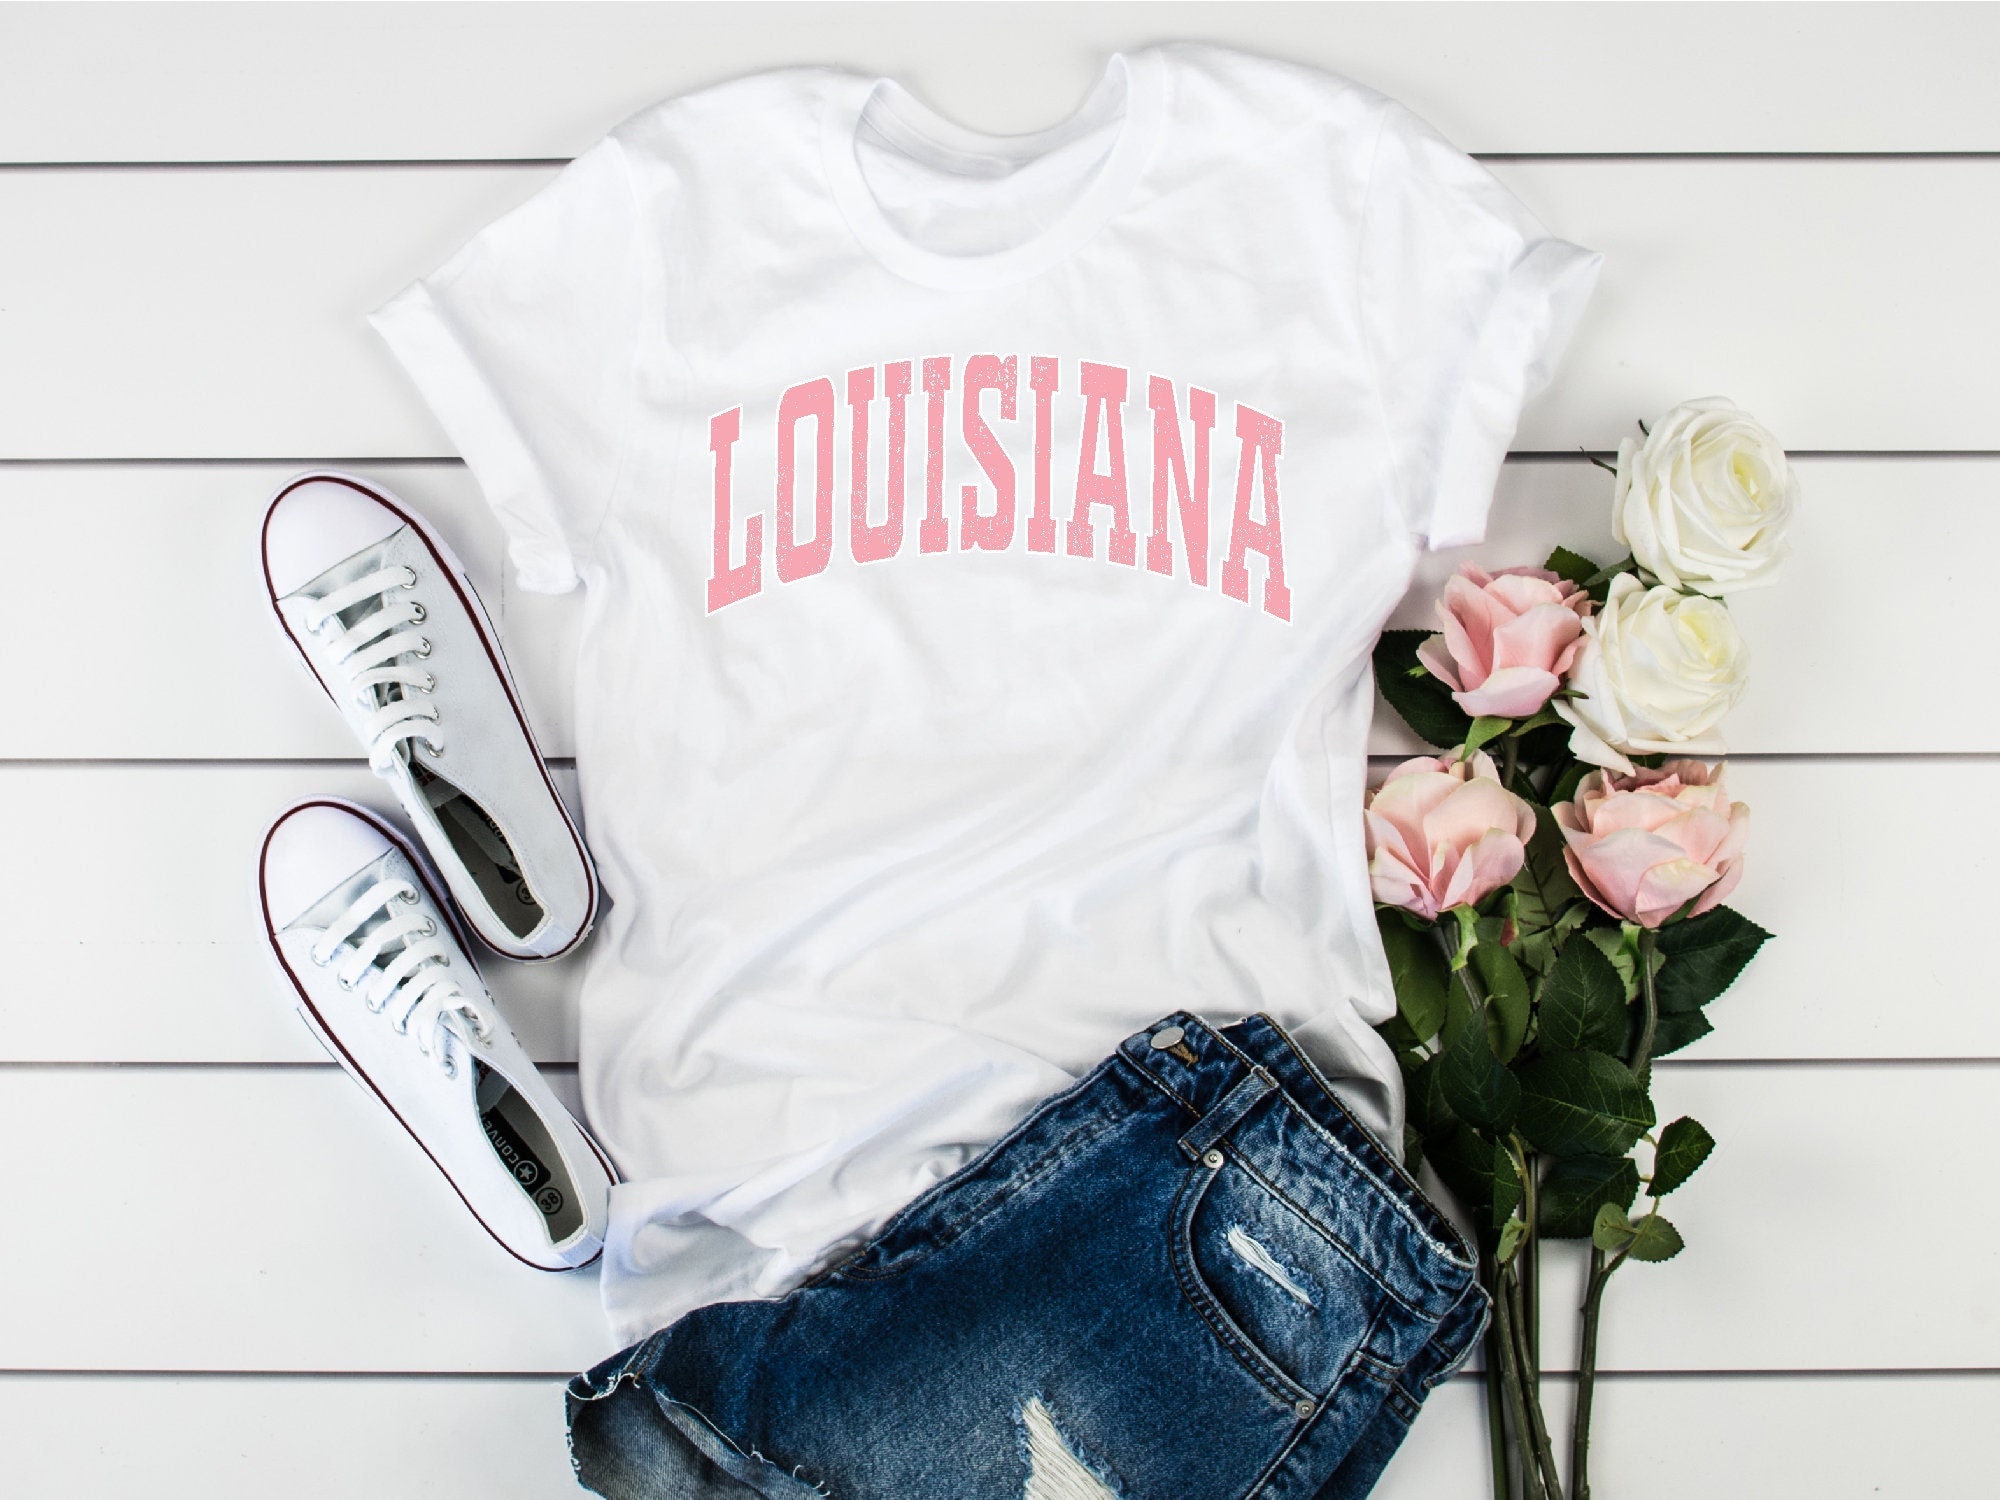 Womens Louisiana Land That I Love With Louisiana Distressed Flag V-Neck  T-Shirt